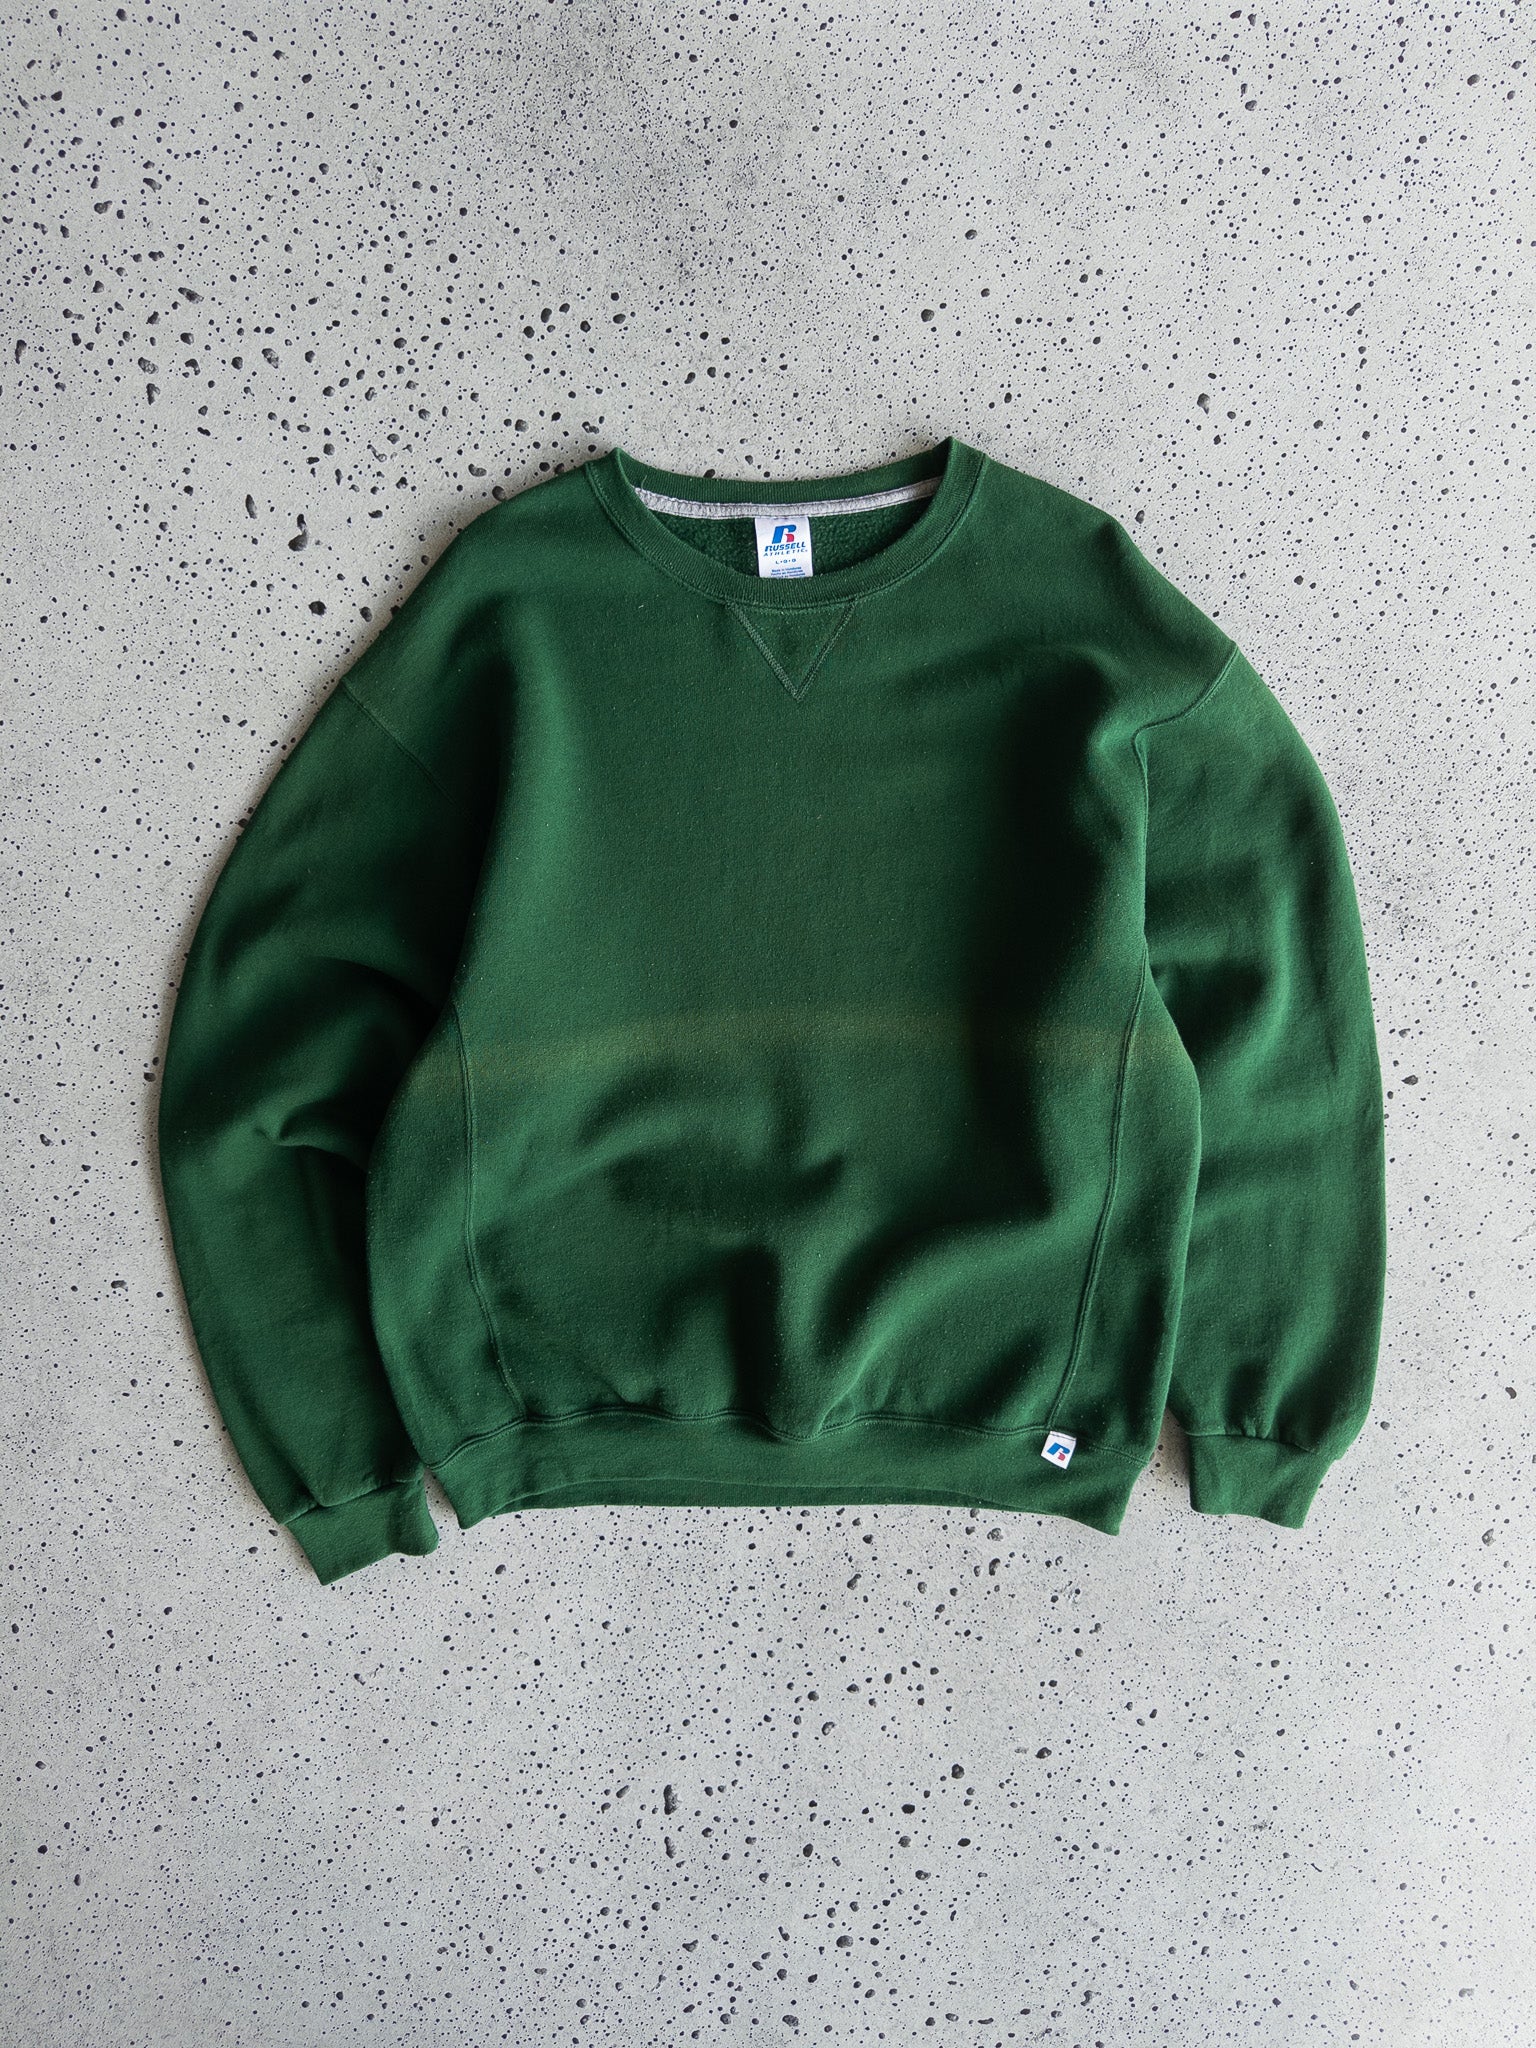 Vintage Russell Sweatshirt (L)